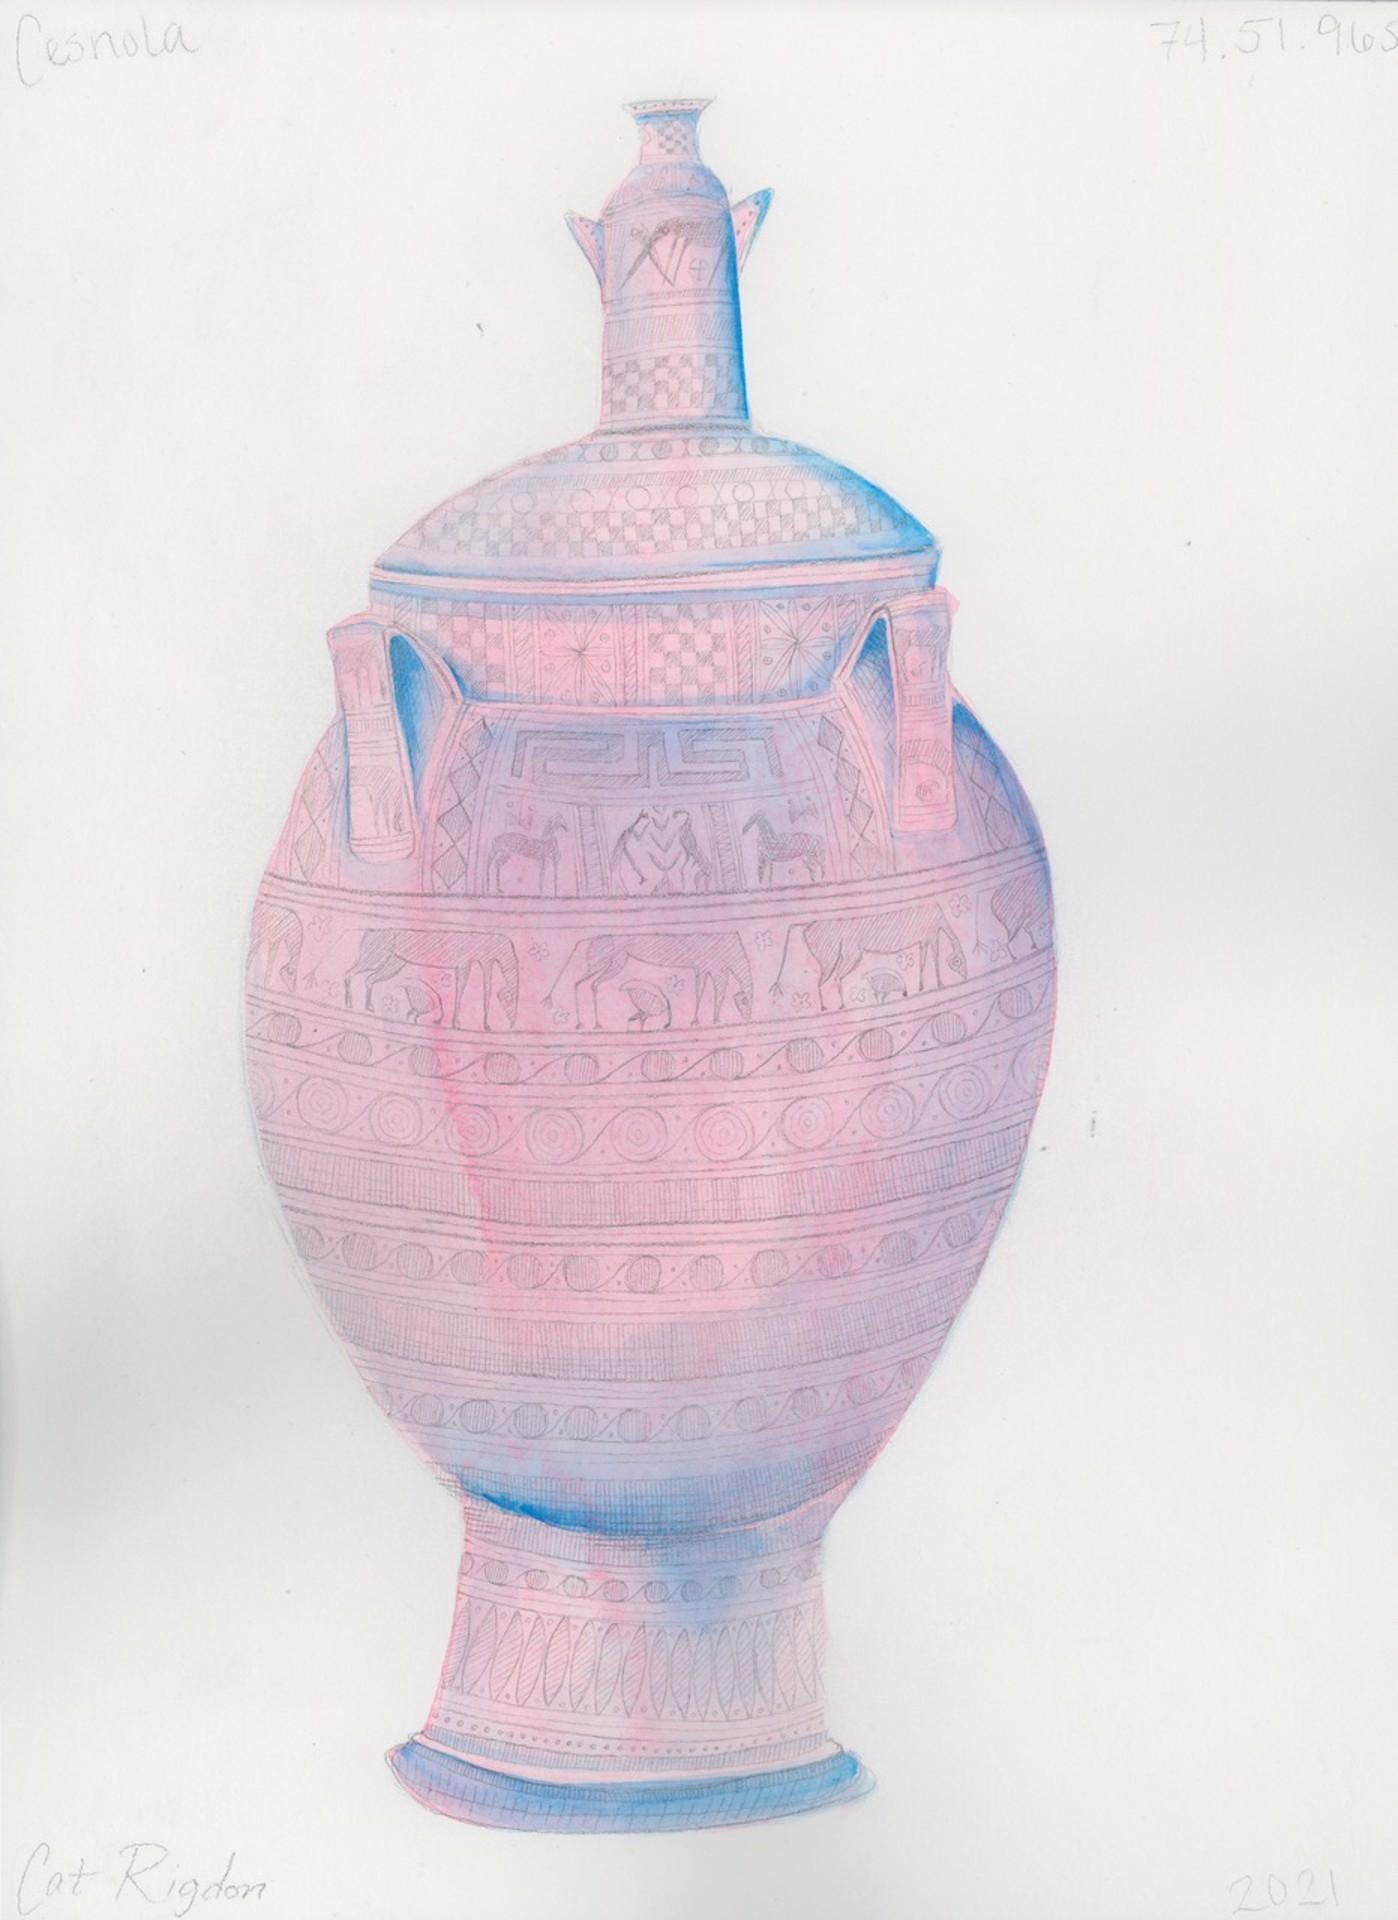 Cat Rigdon Still-Life - Cesnola Lidded Krater 74.51.965, gouache painting, pottery vase/artifact